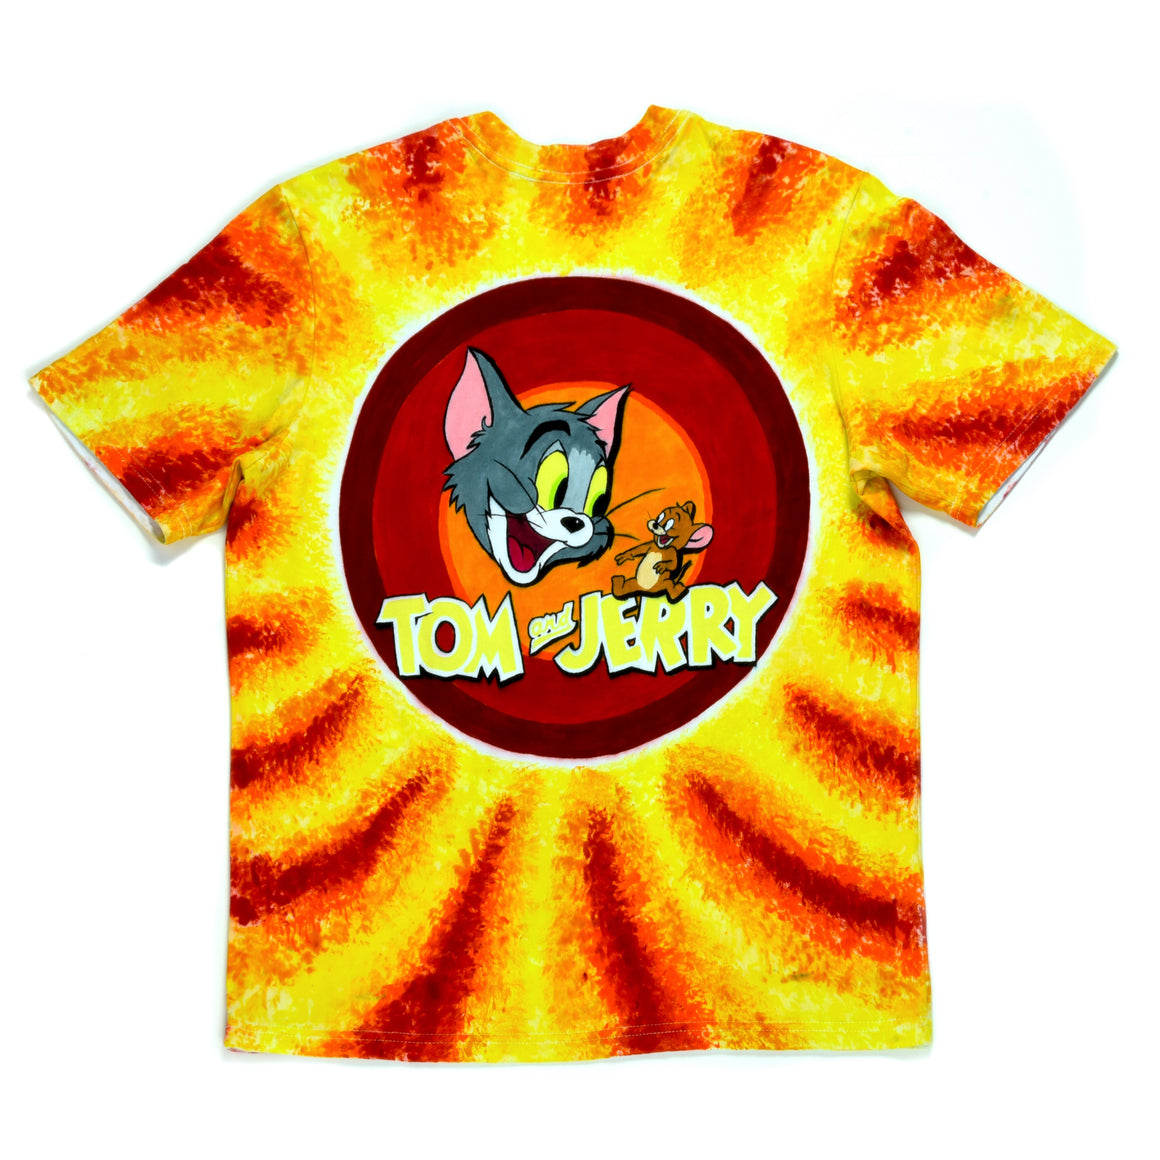 Medium - Hand-dyed Cartoon Art T-Shirt - Tom and Jerry #1